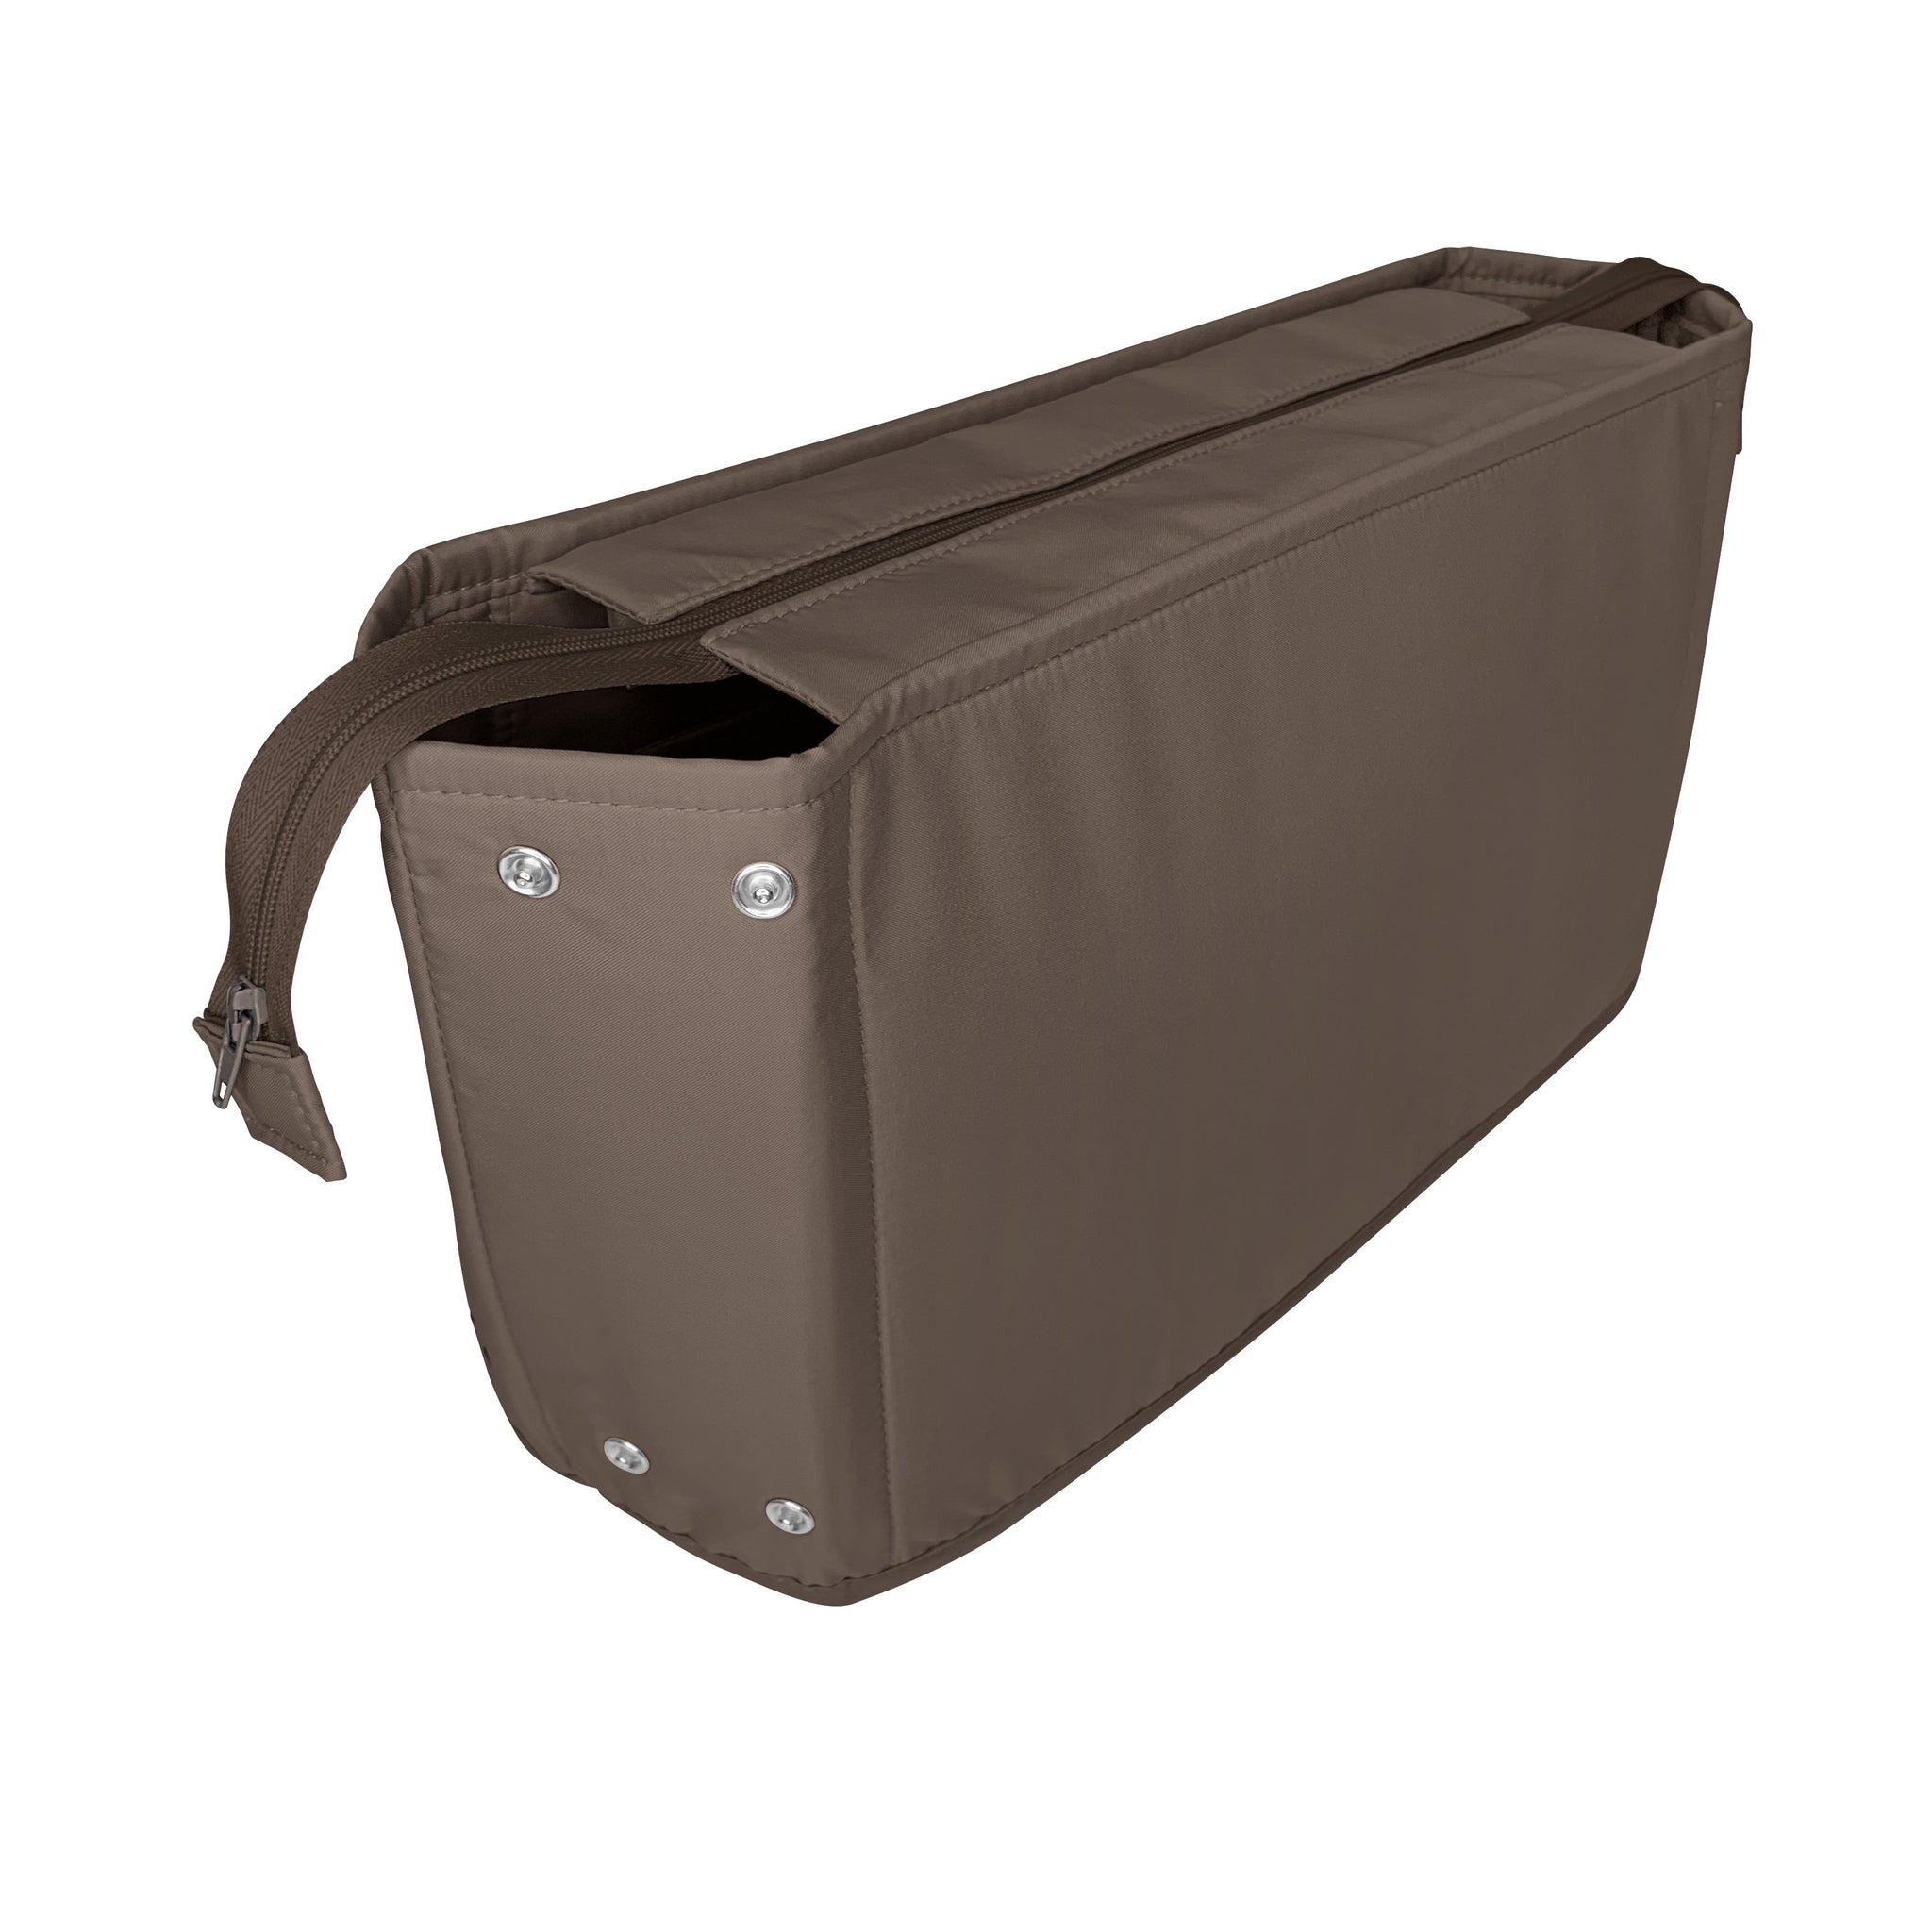 ALUCKY Purse Organizer Insert, Premium Nylon Bag organizer with zipper, bag  in bag Liner Shaper Comp…See more ALUCKY Purse Organizer Insert, Premium